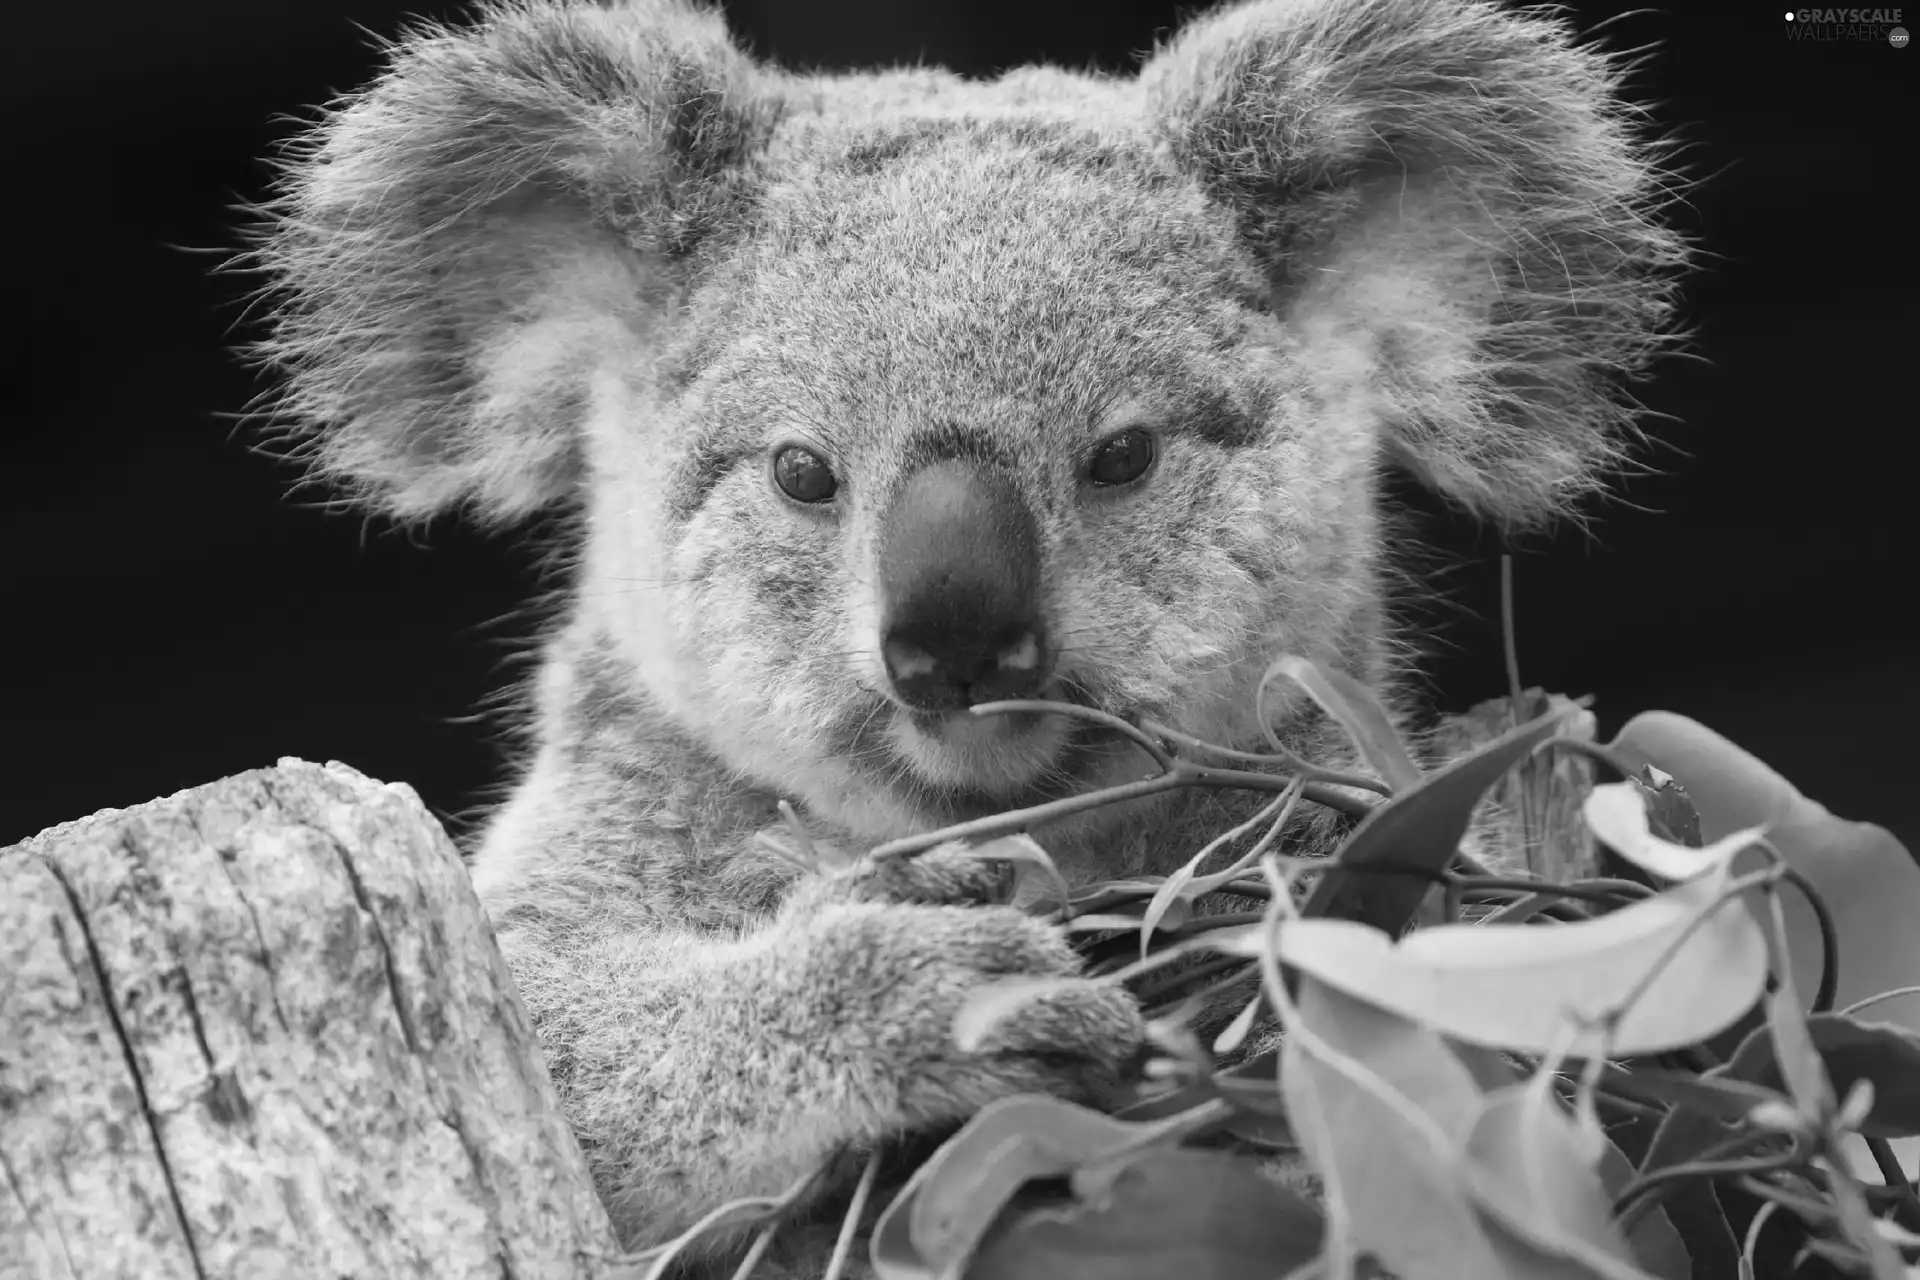 Leaf, teddy bear, Koala